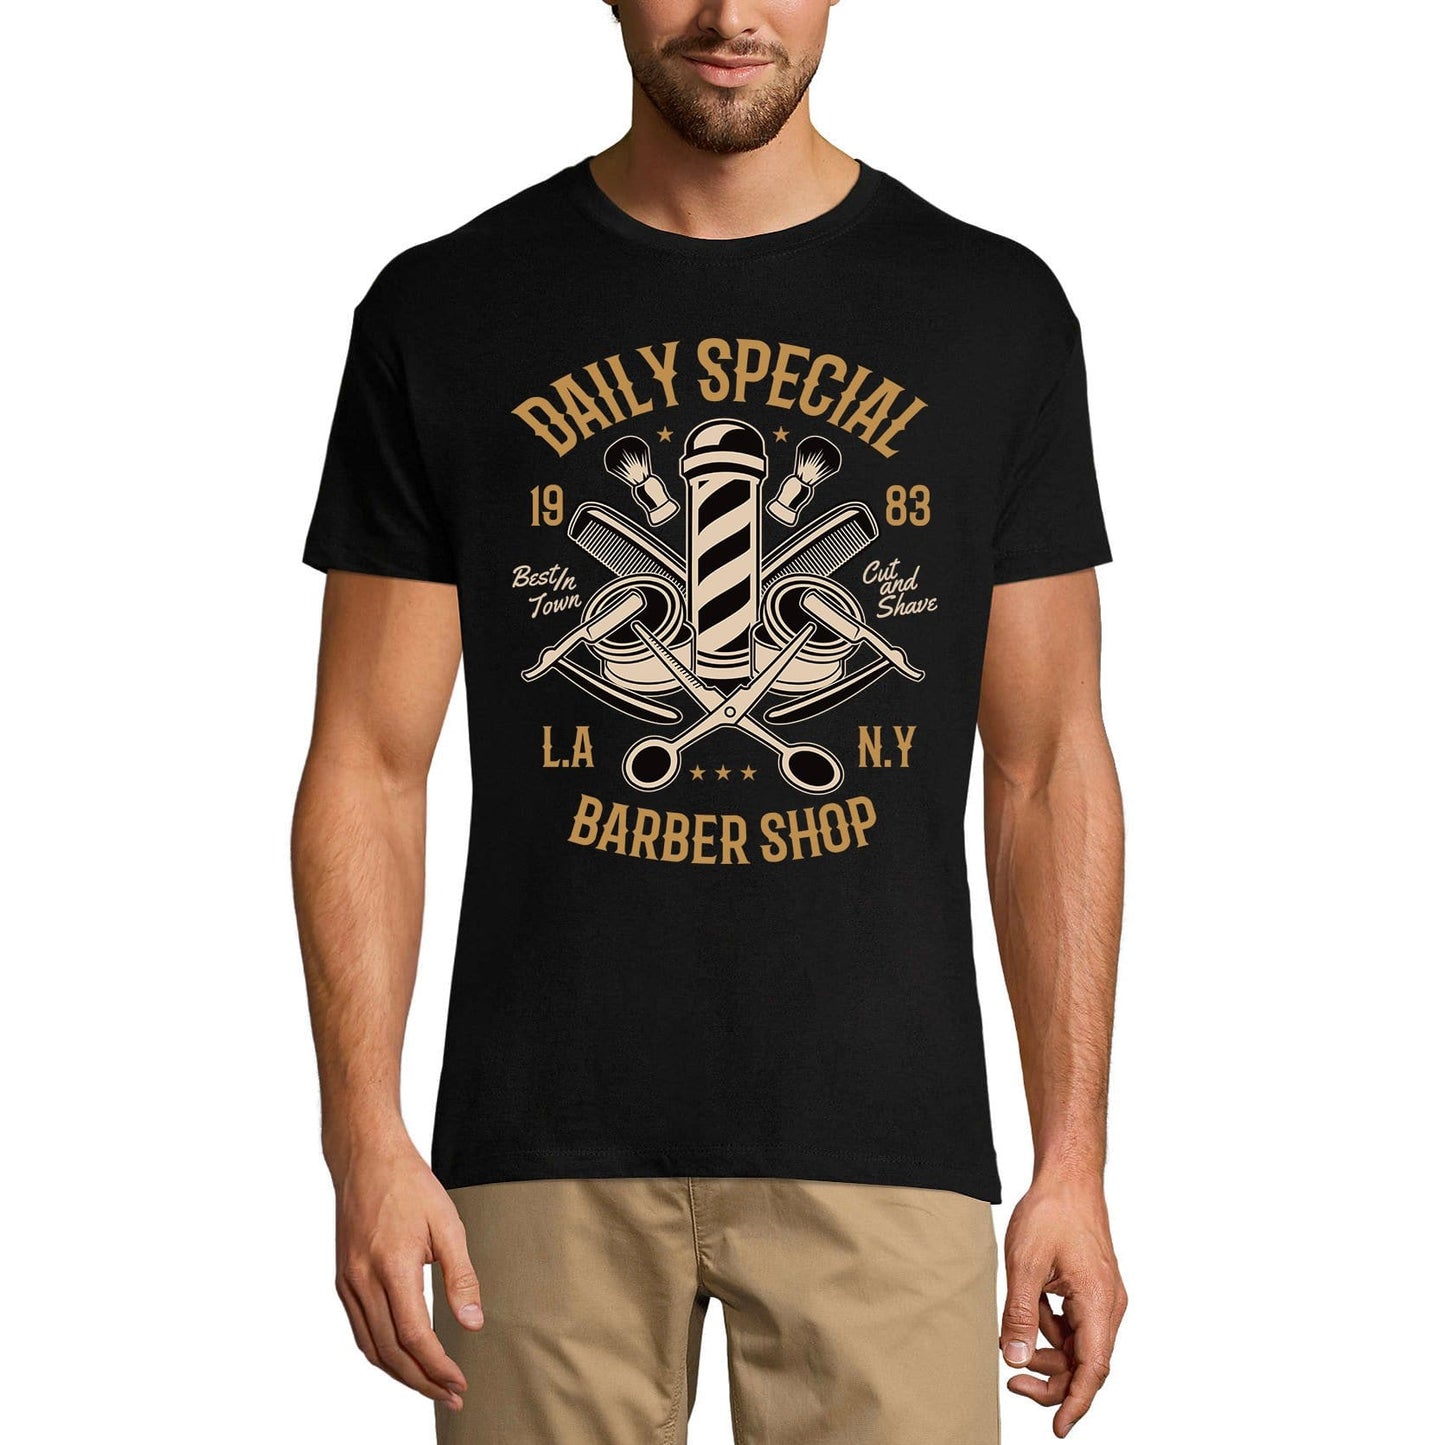 ULTRABASIC Herren T-Shirt Daily Special Barbershop 1983 – Geschenk für Friseur T-Shirt